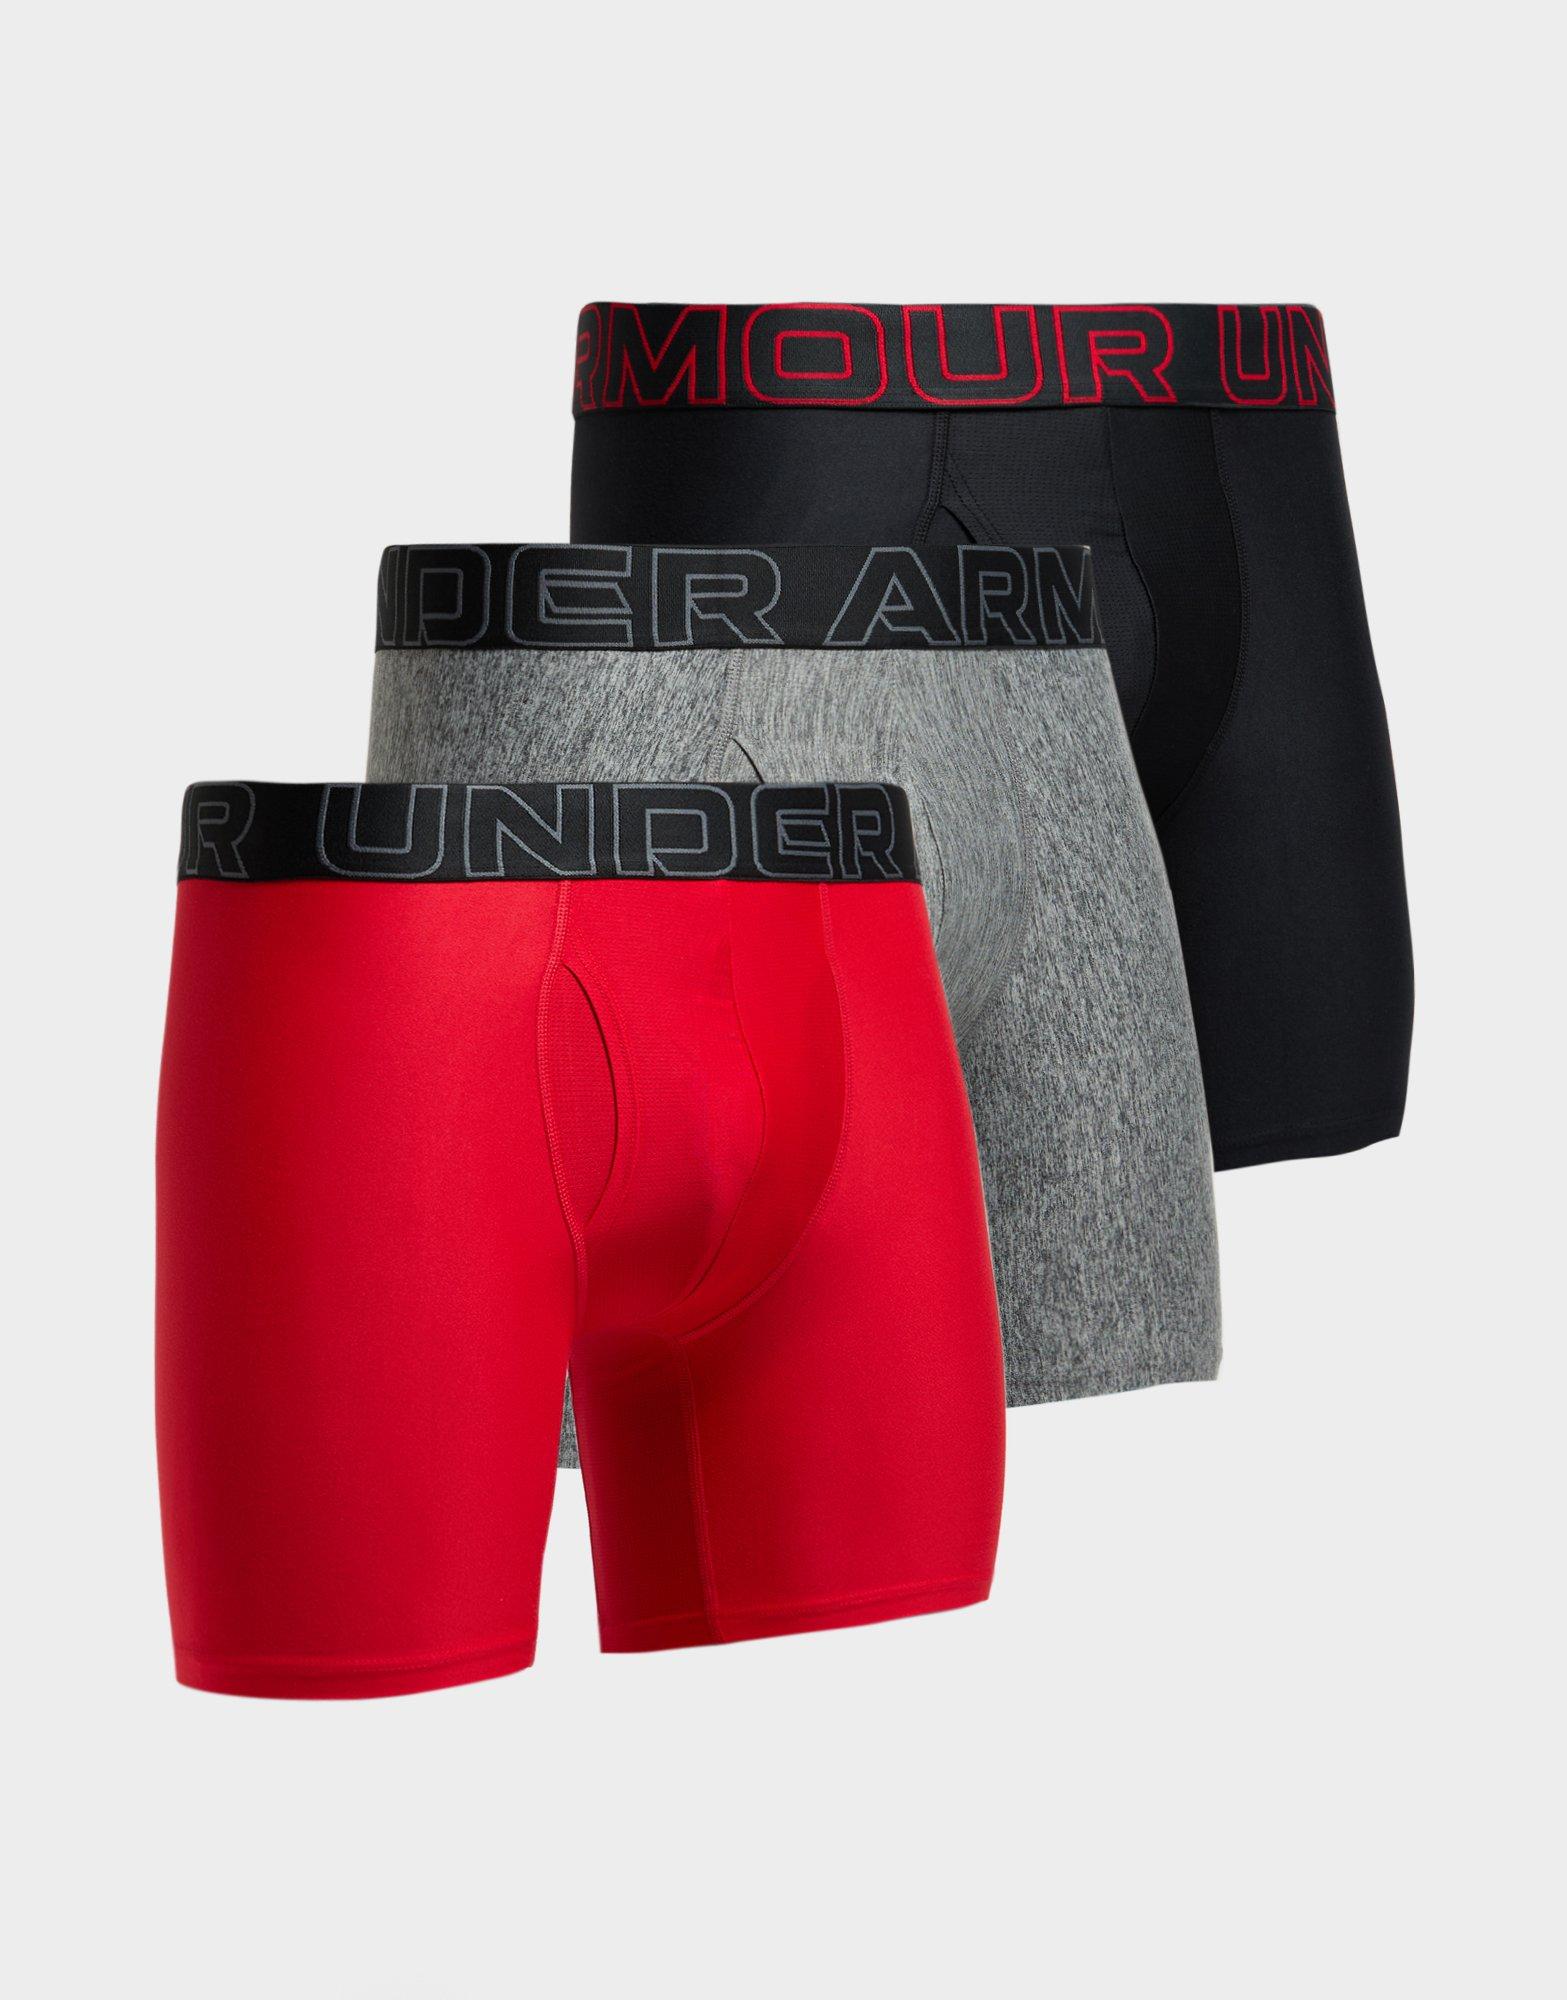 UNDER ARMOUR Tech Boxerjock 6 Boxer Brief Underwear sz XL X-Large